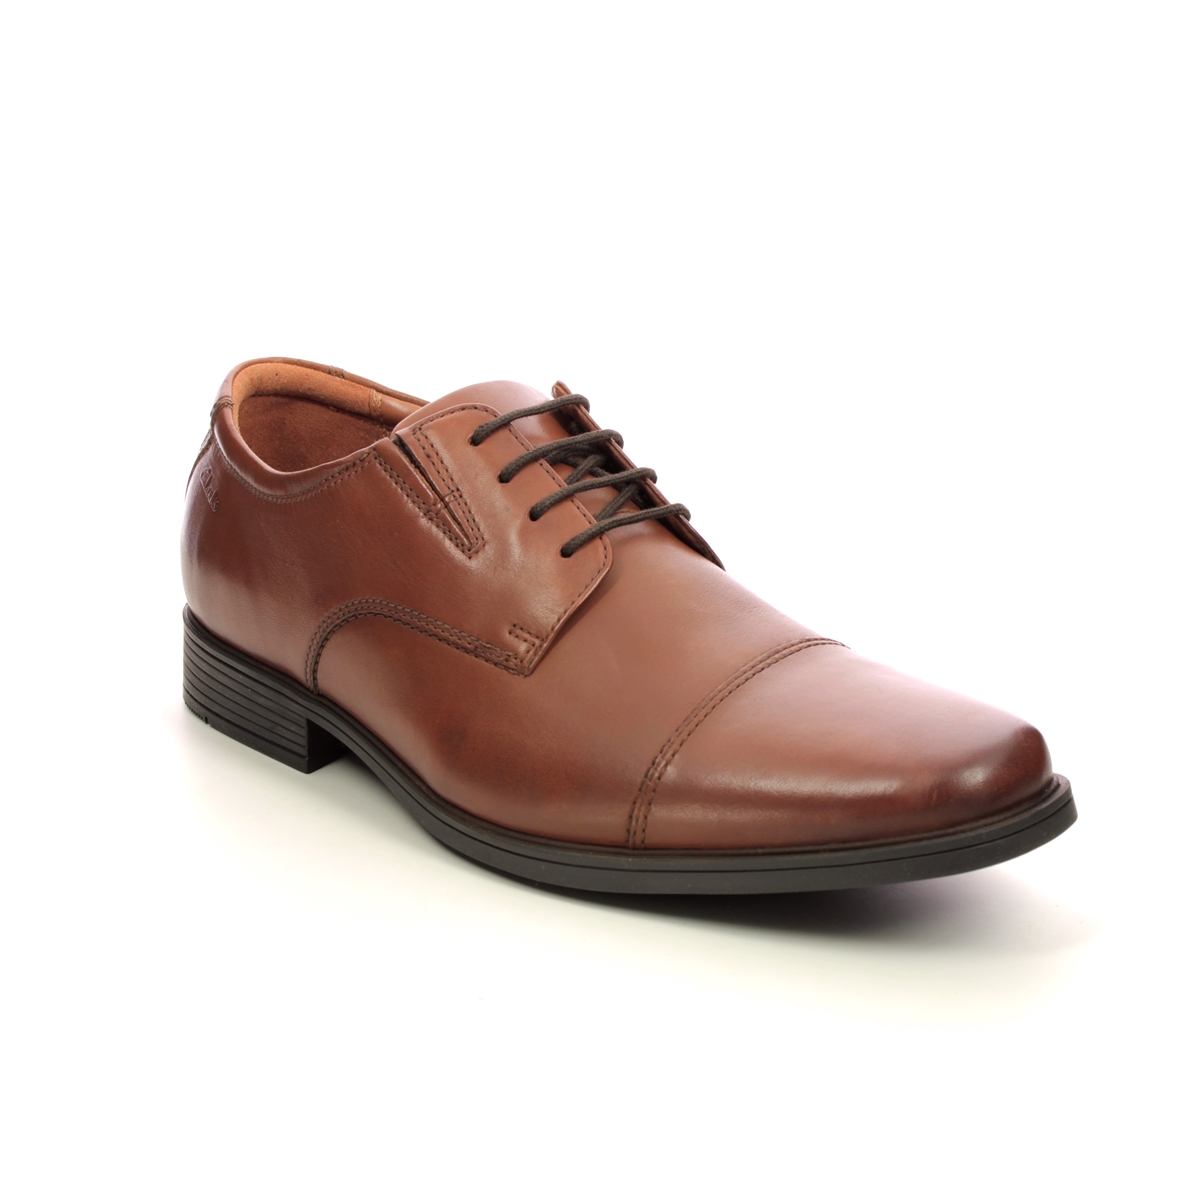 Clarks Tilden Cap Dark Tan Mens Formal Shoes 300968H In Size 6.5 In Plain Dark Tan H Width Fitting Extra Wide